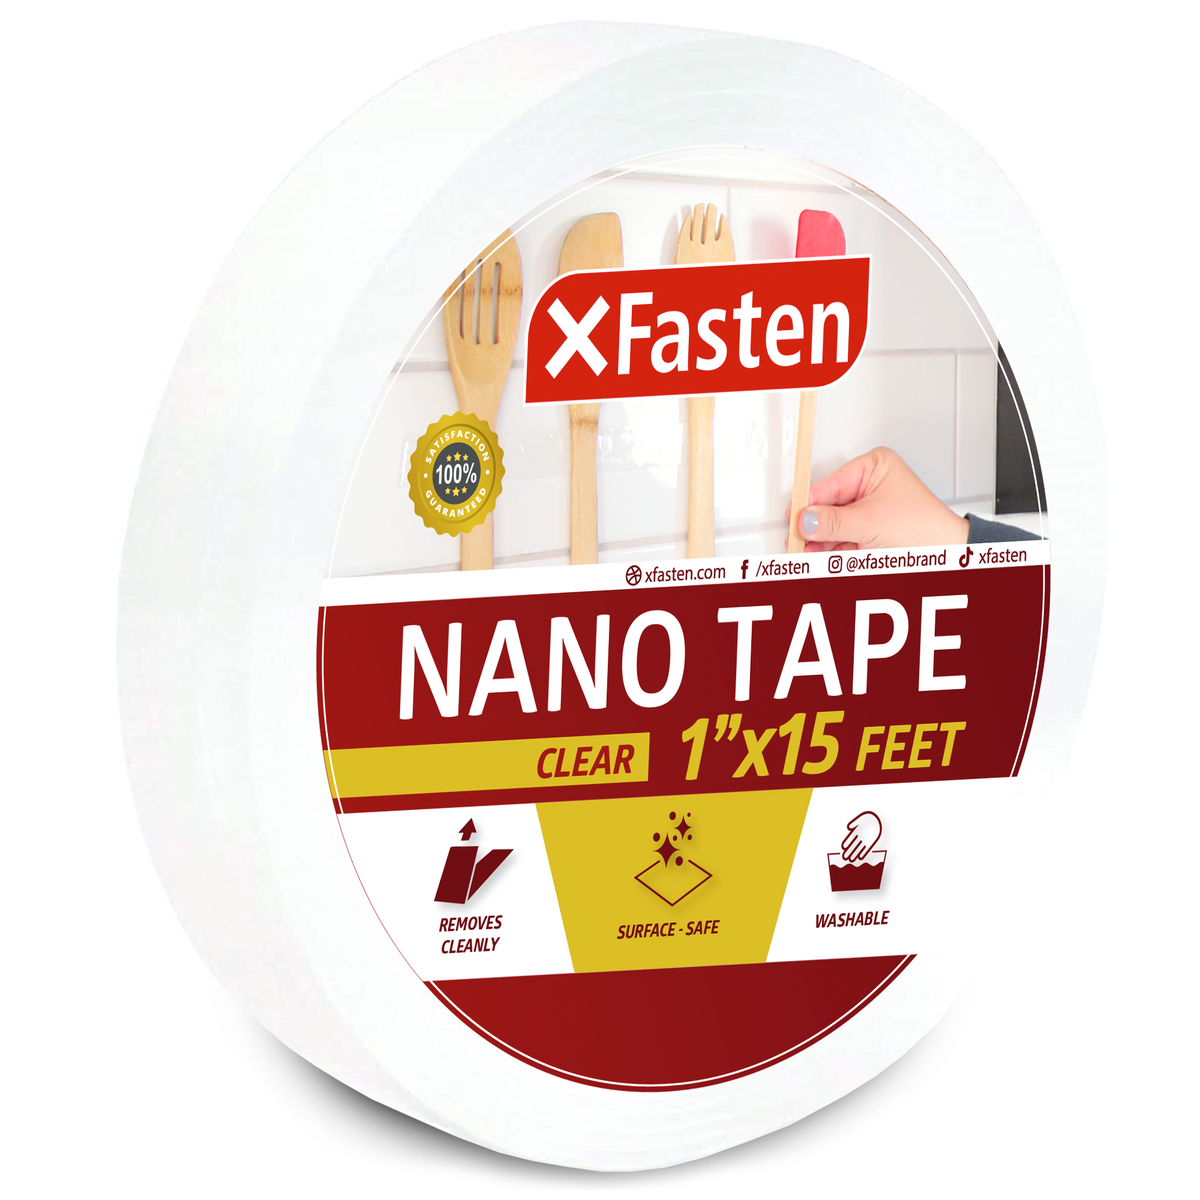 PVC Double-sided Nano Tape